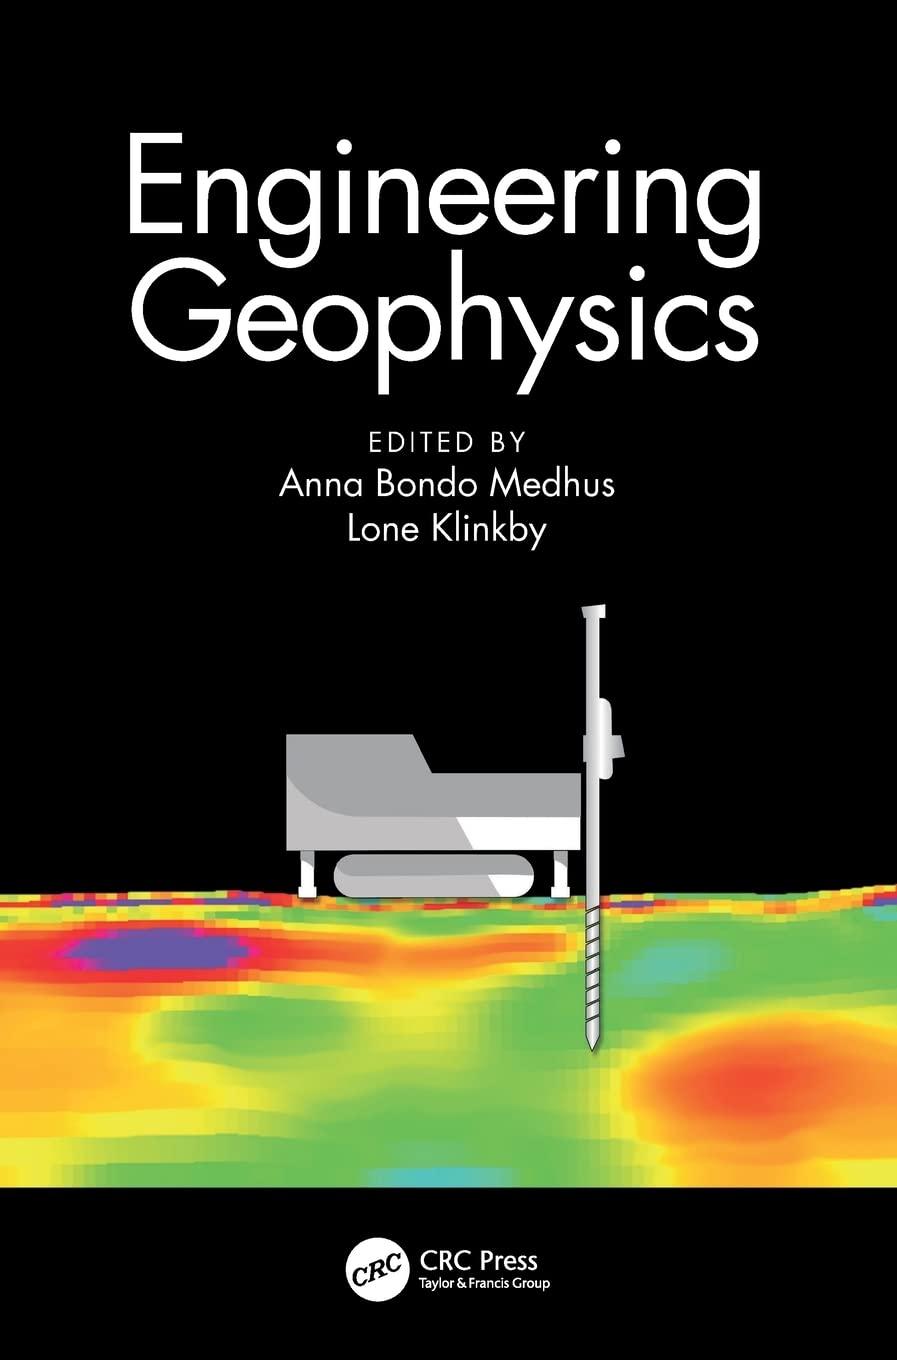 engineering geophysics 1st edition anna bondo medhus, lone klinkby 103202688x, 978-1032026886